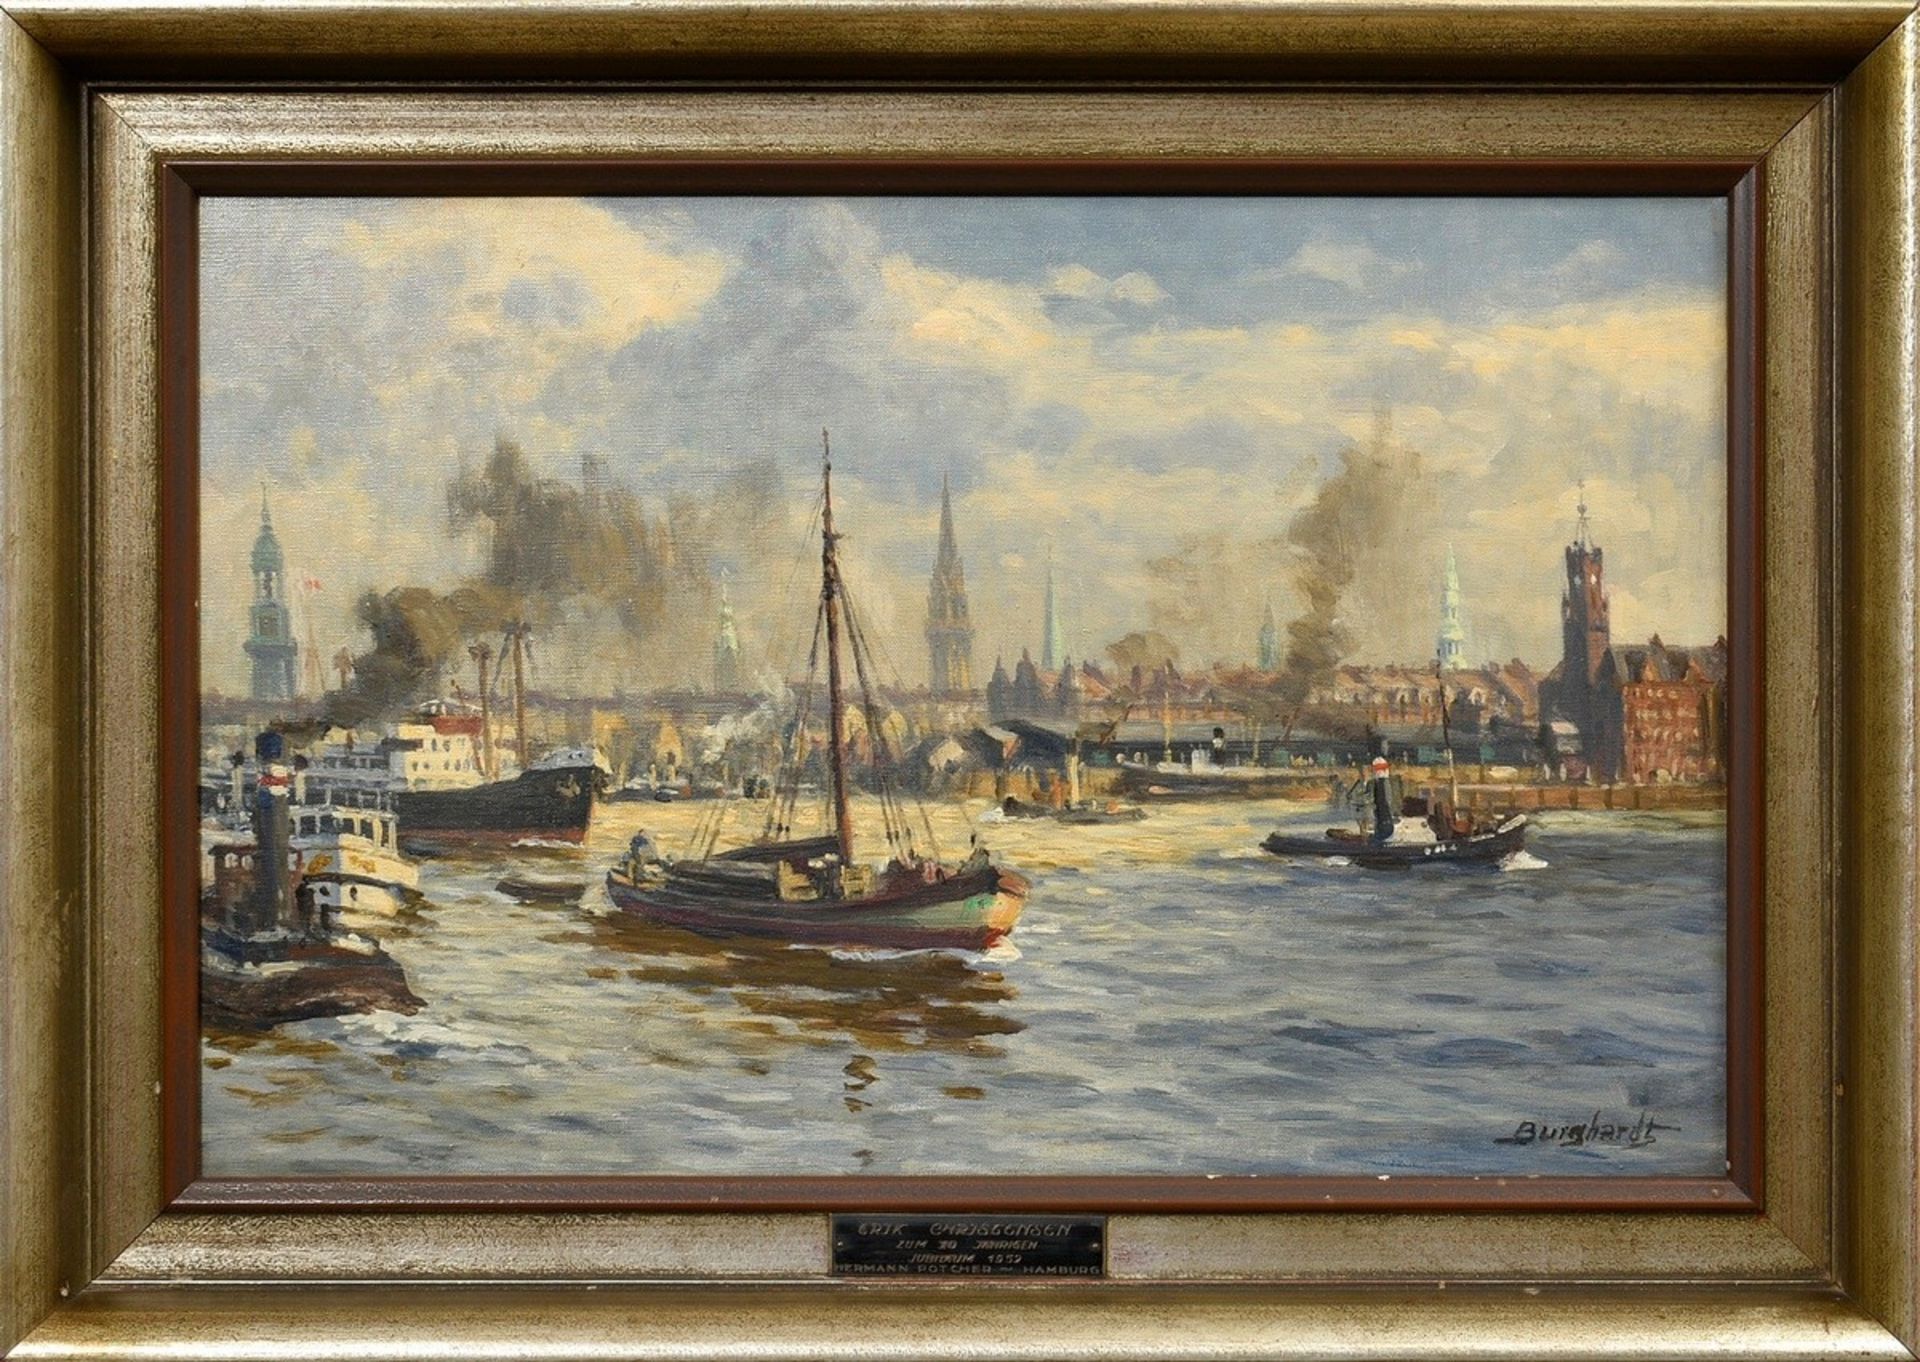 Burghardt, Gustav Paul (1875-1955) "Hamburg harbor with ship traffic and skyline", oil/canvas, b.r. - Image 2 of 5